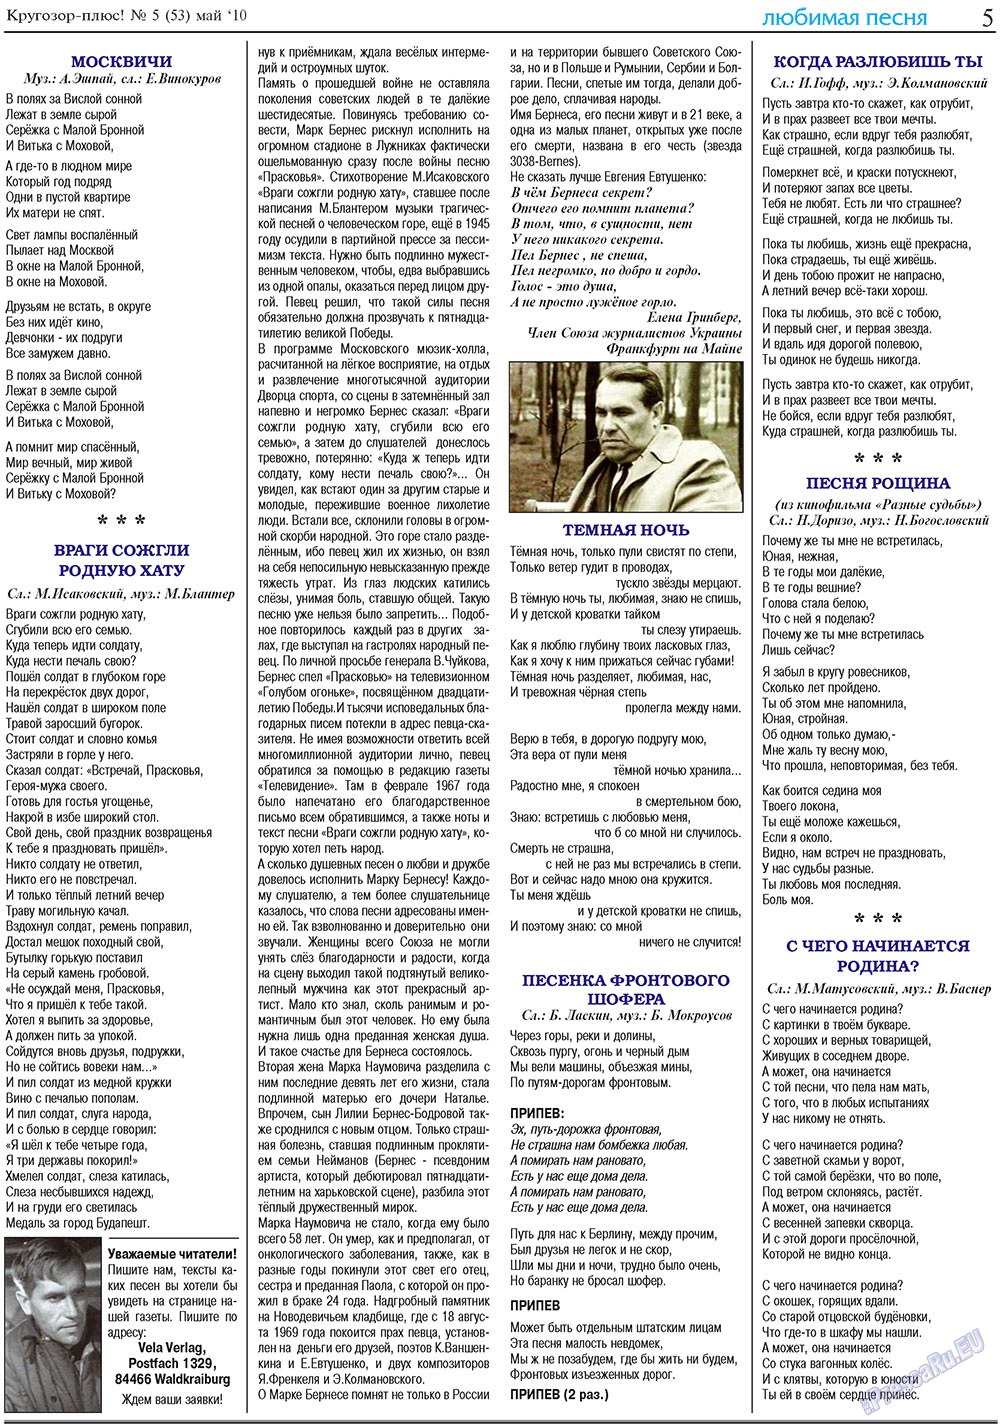 Кругозор плюс! (газета). 2010 год, номер 5, стр. 21